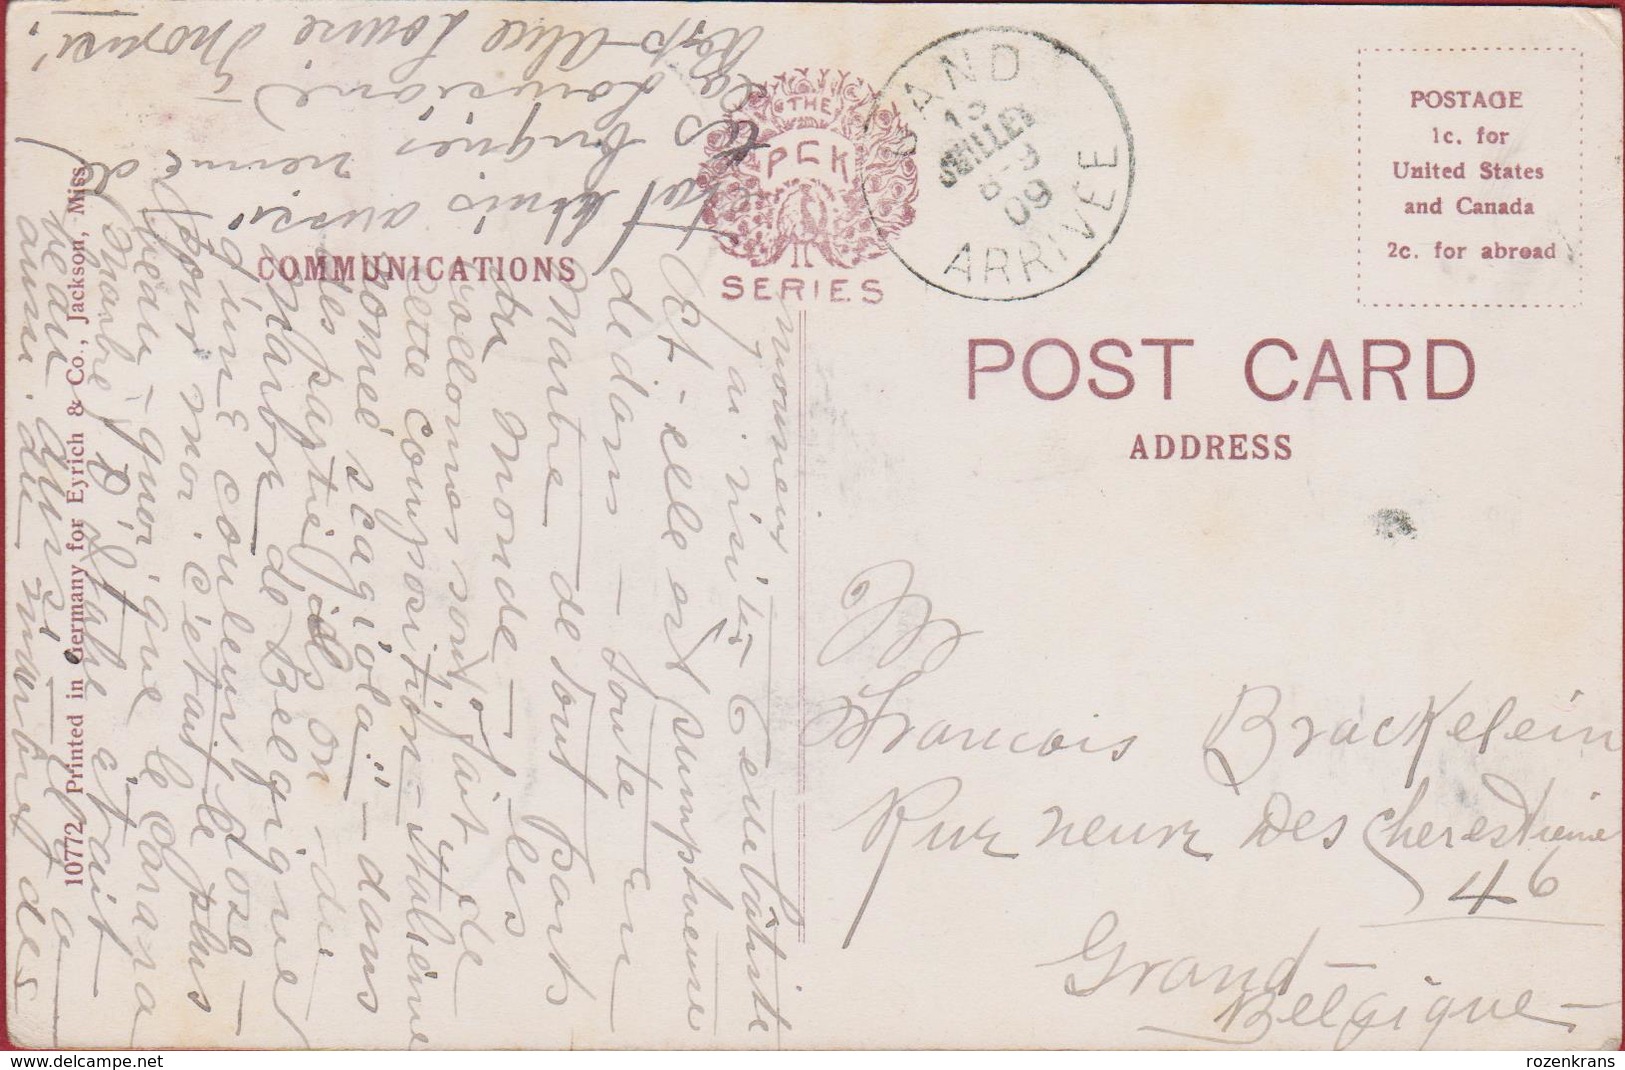 New State Capitol United States USA Rare Old Postcard 1906 Cachet Jeanerette - Jackson